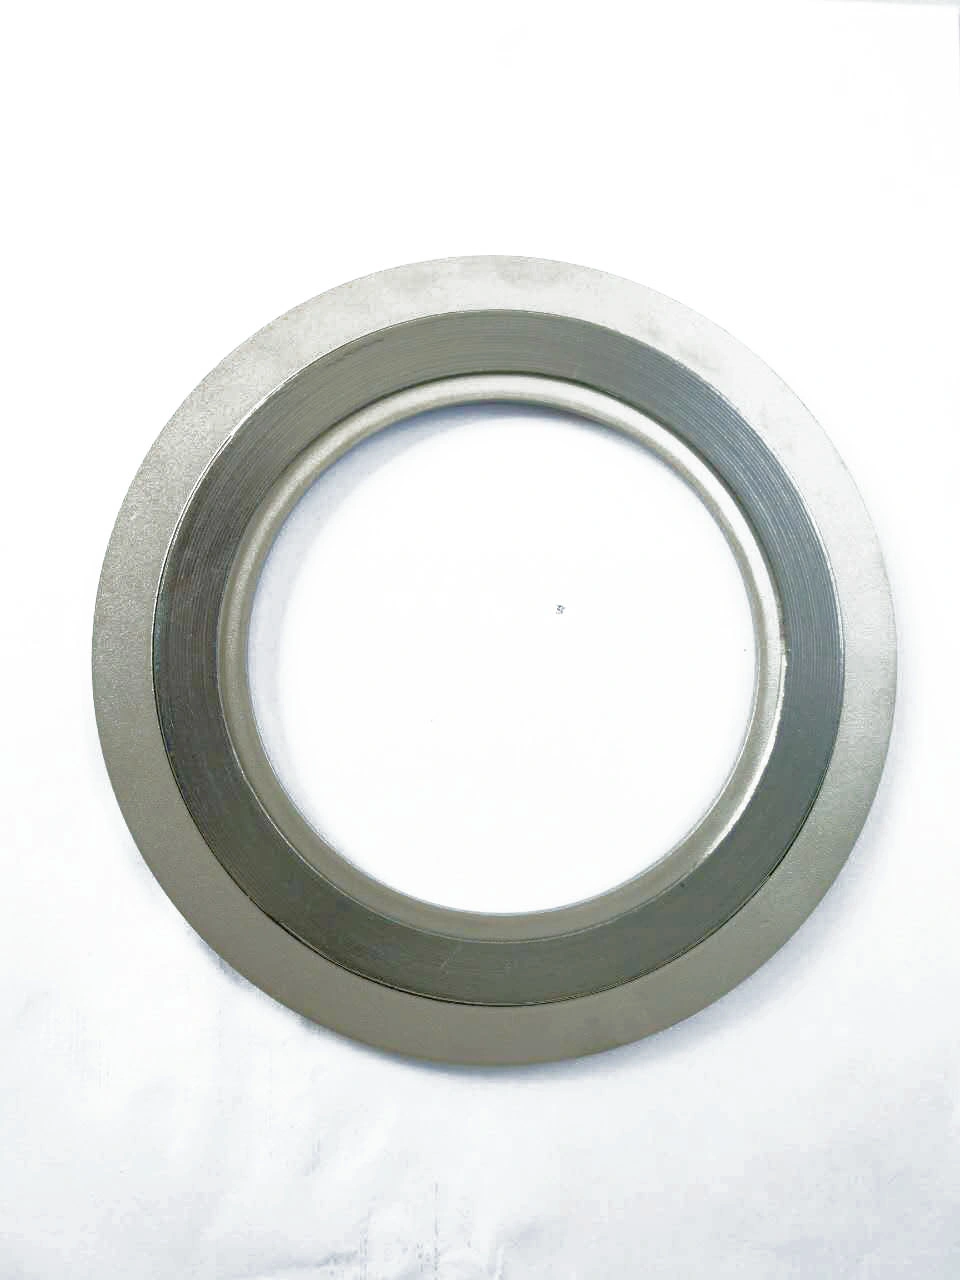 Spiral Wound Gasket Used in Heat Exchanger